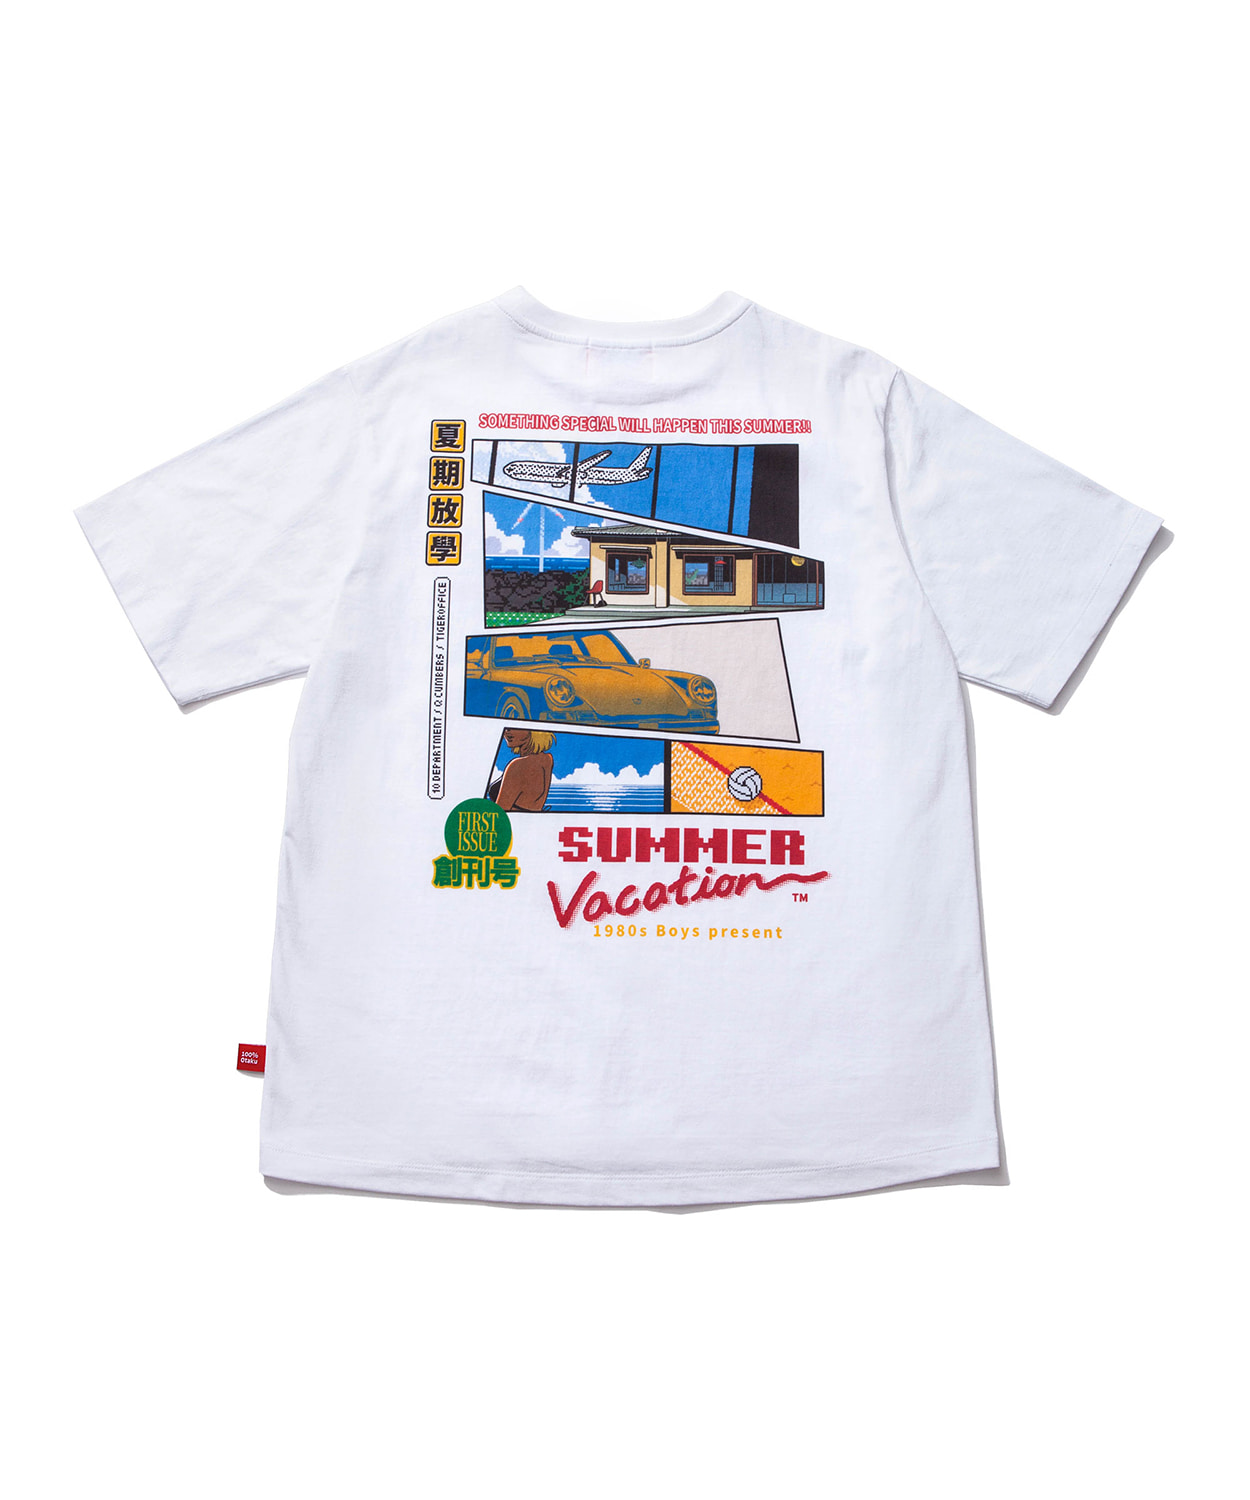 Q CUMBERS큐컴버스 [80YS] Summer Vacation_5(여름방학) 티셔츠 - 화이트